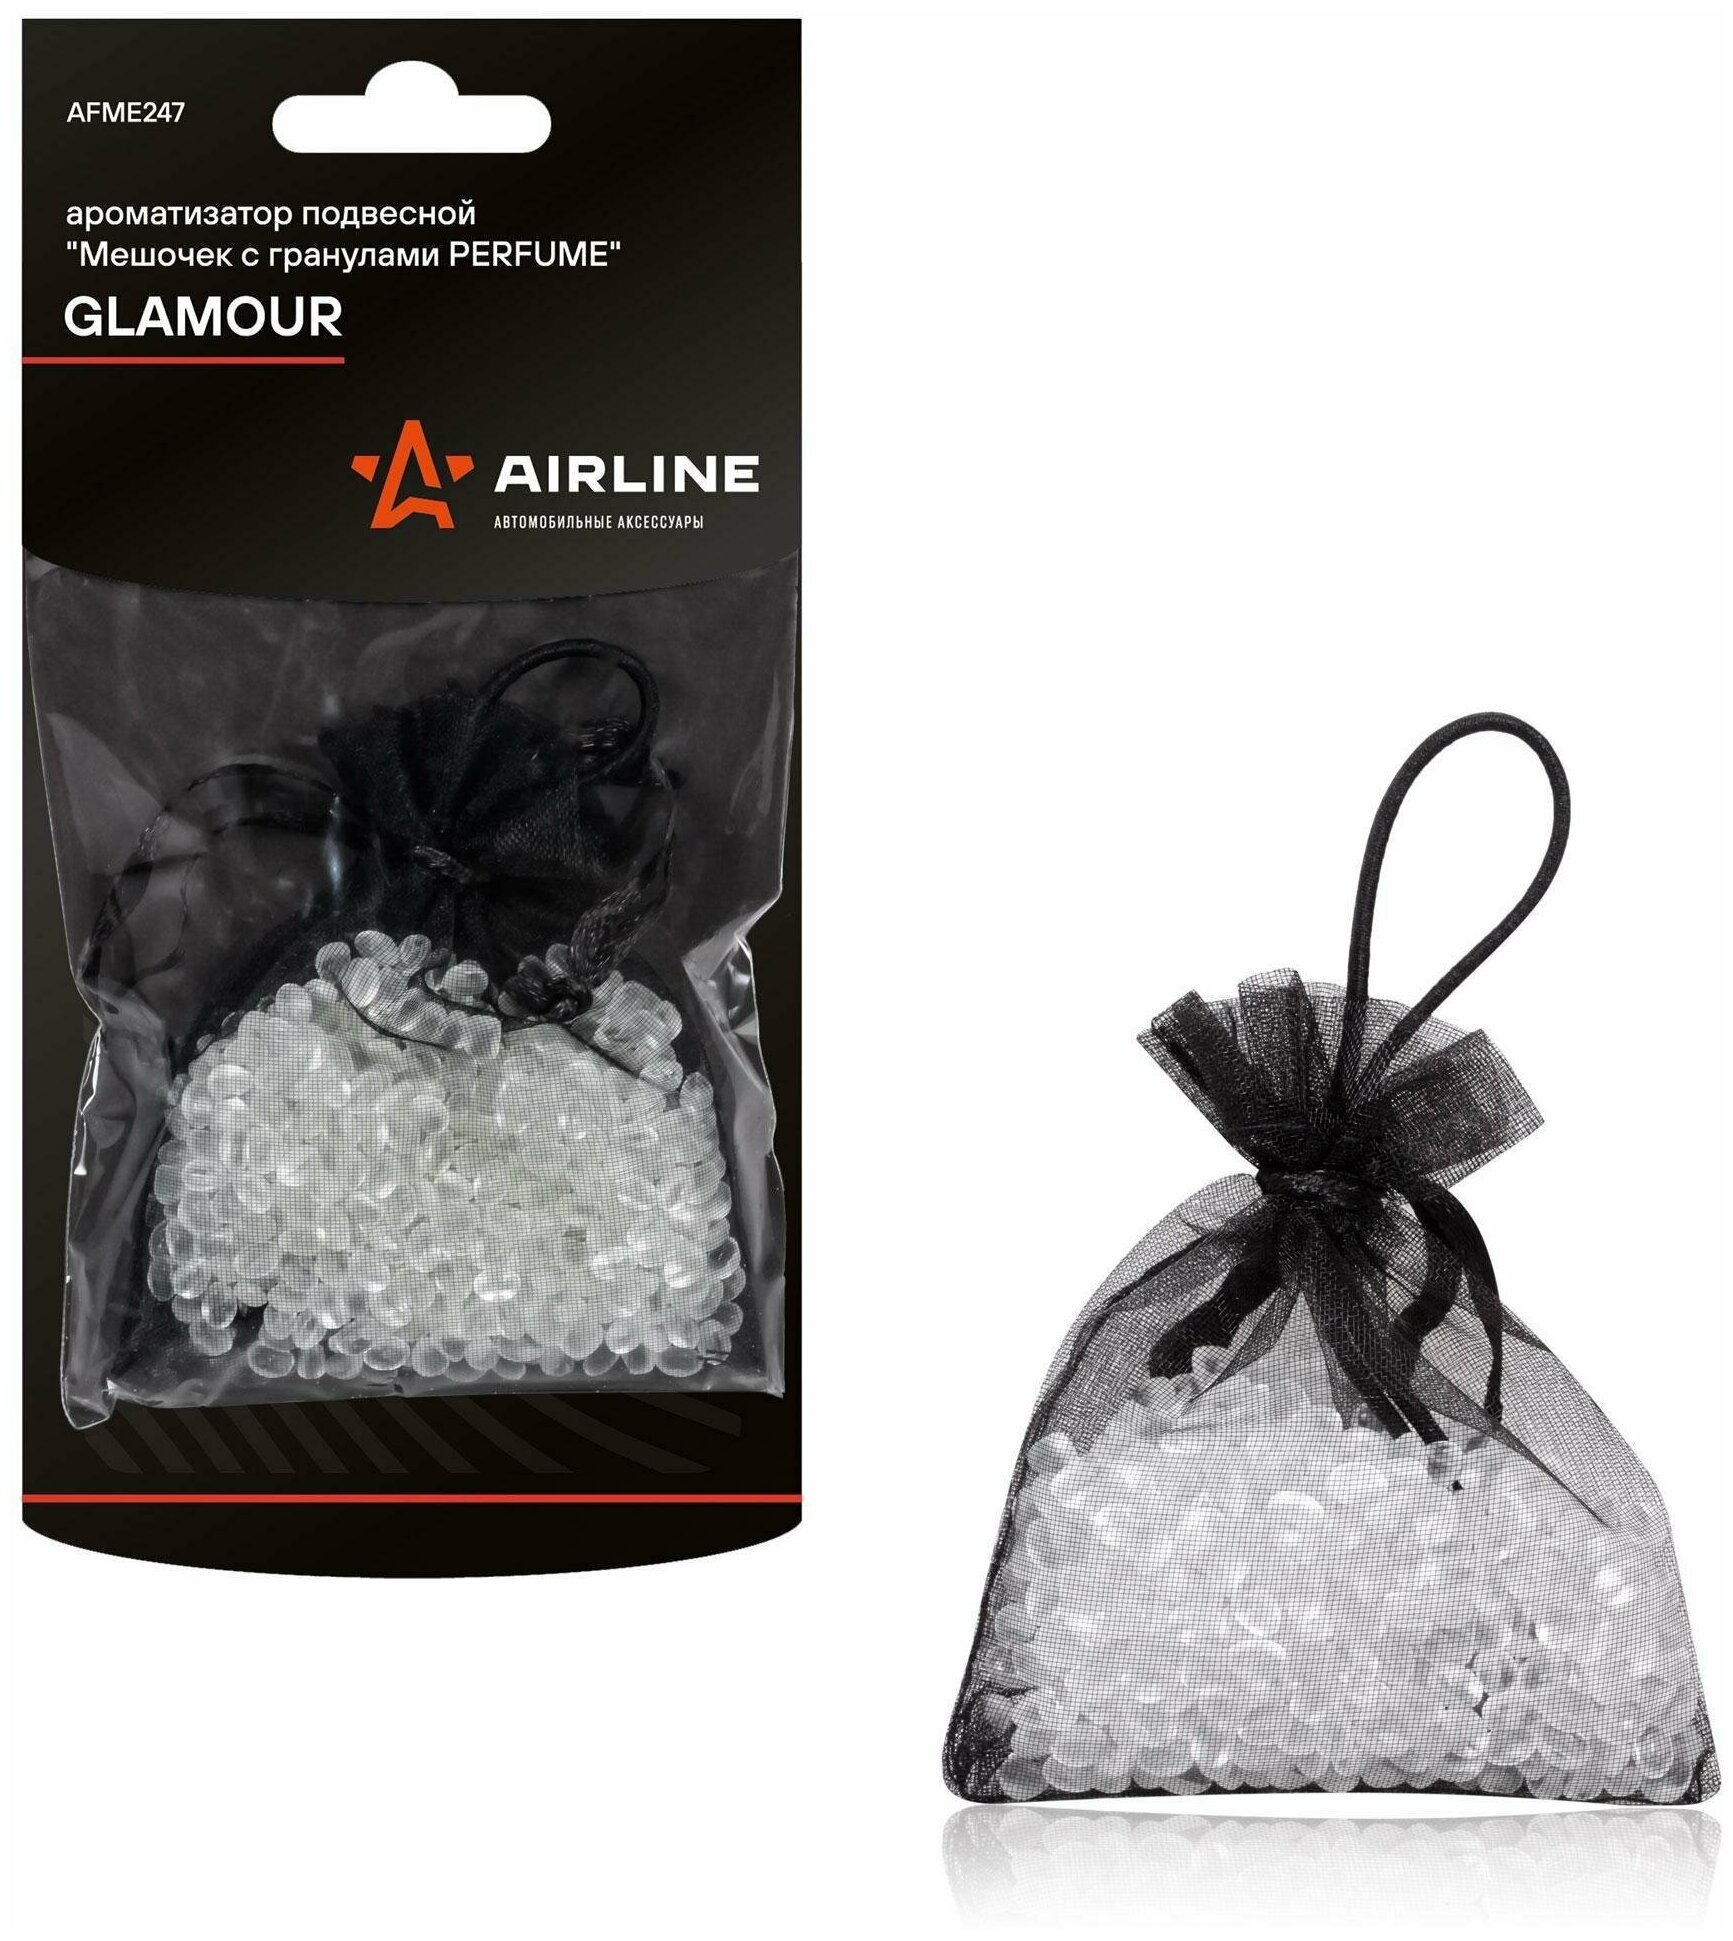 Ароматизатор подвесной "Мешочек с гранулами Perfume" GLAMOUR AIRLINE - фото №1